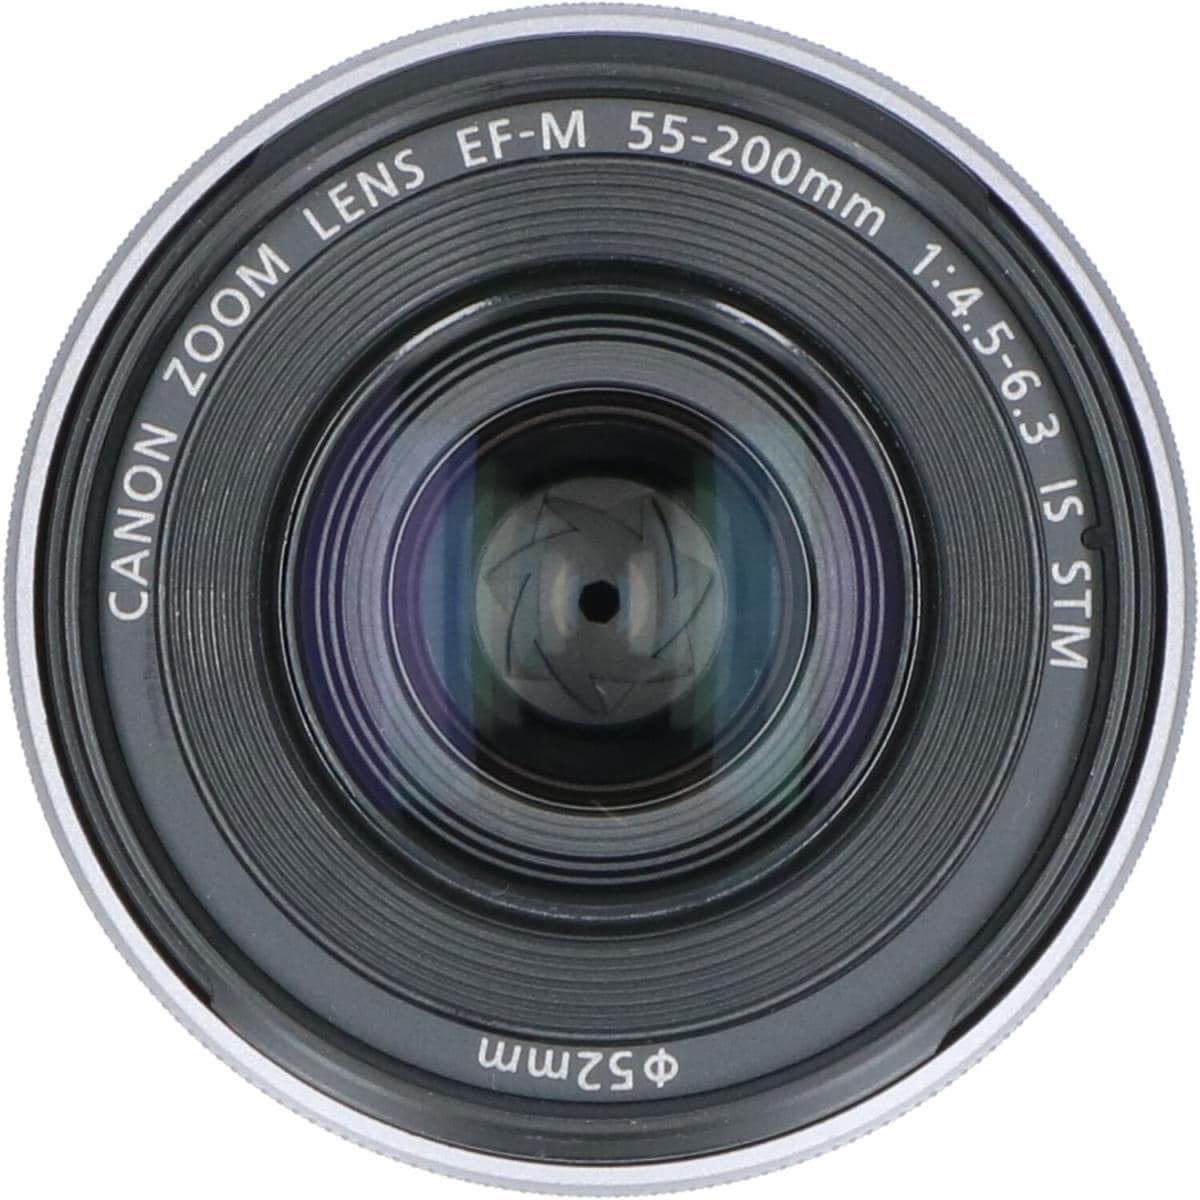 KOMEHYO |佳能EF-M55-200mm f/4.5-6.3ISSTM Silver|佳能[Canon]|相機